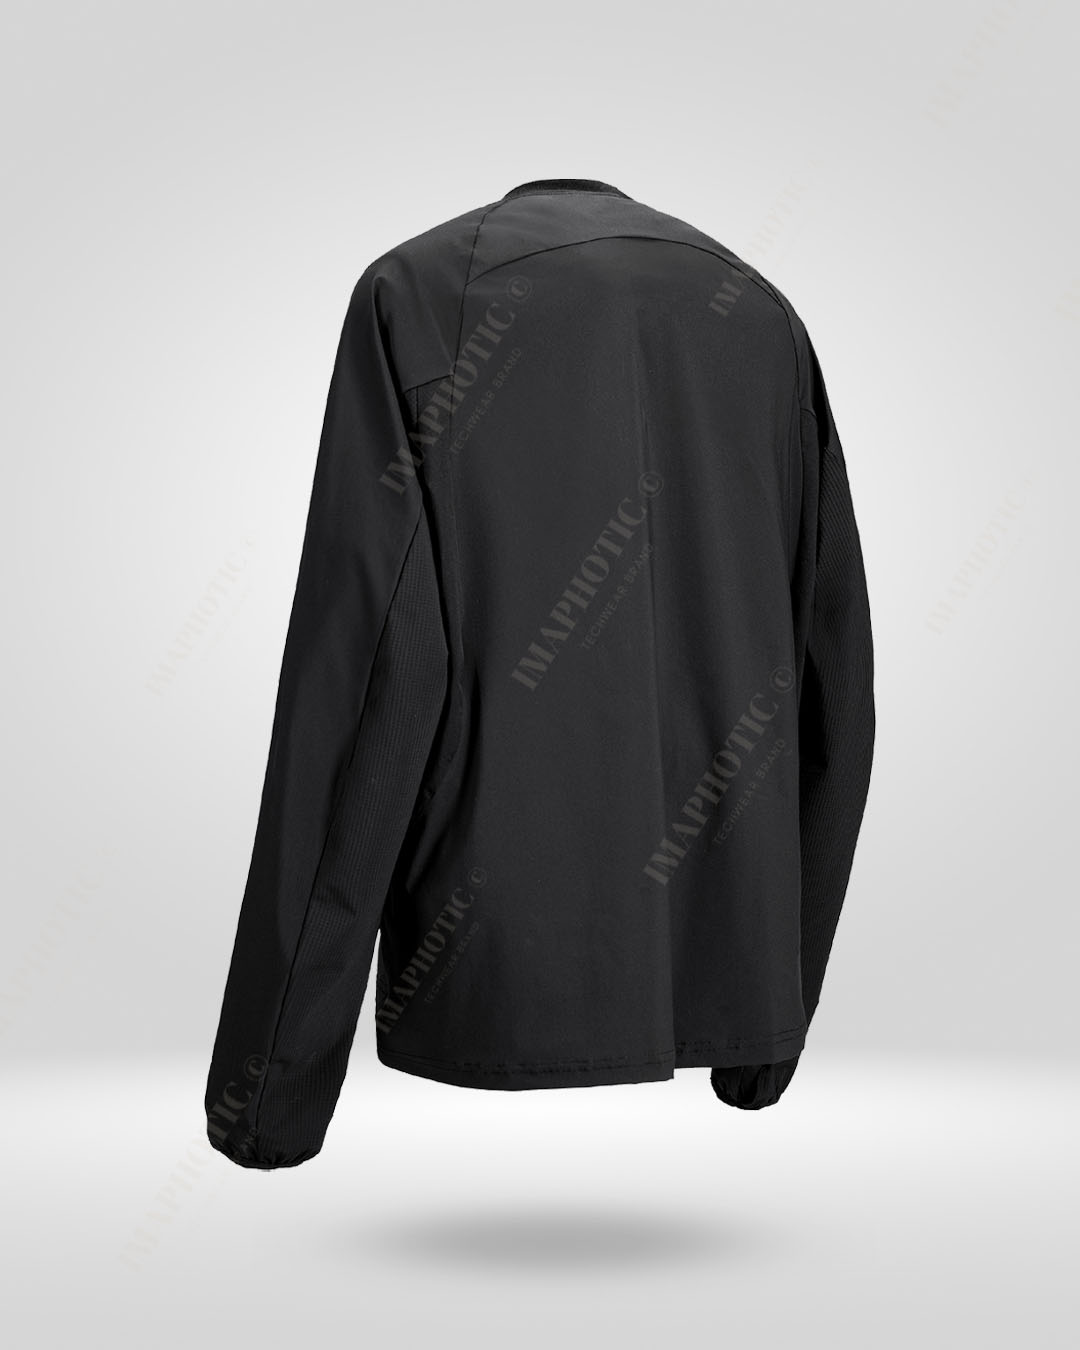 Tactical Raglan Sleeved Black Sweatshirt - For the Modern Trailblazer